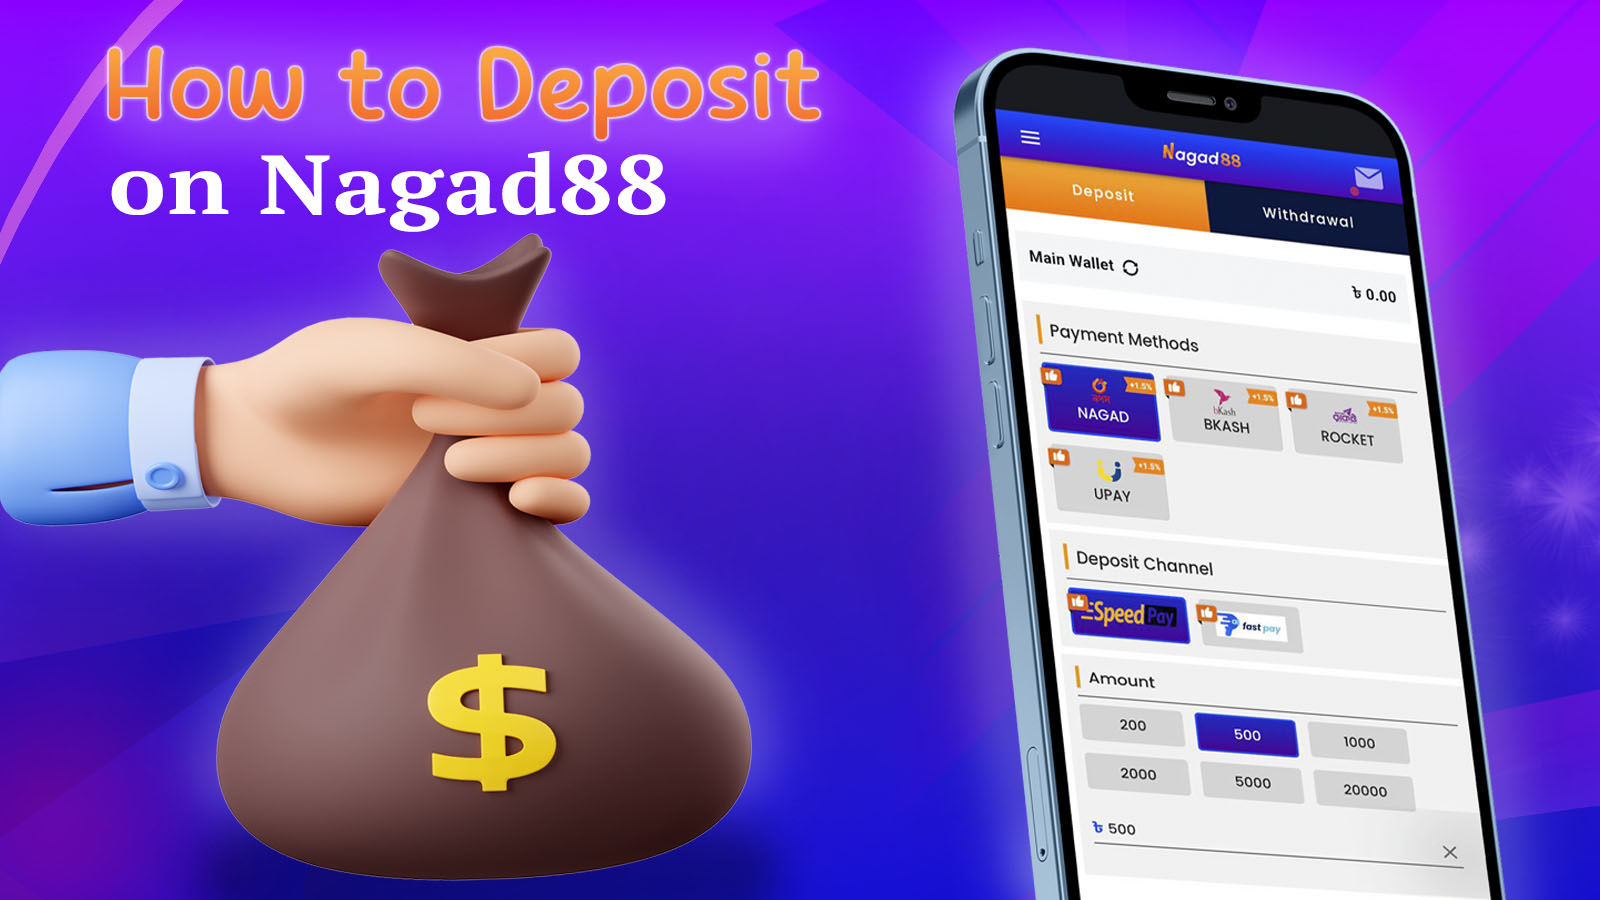 How to Make a Deposit on Nagad88